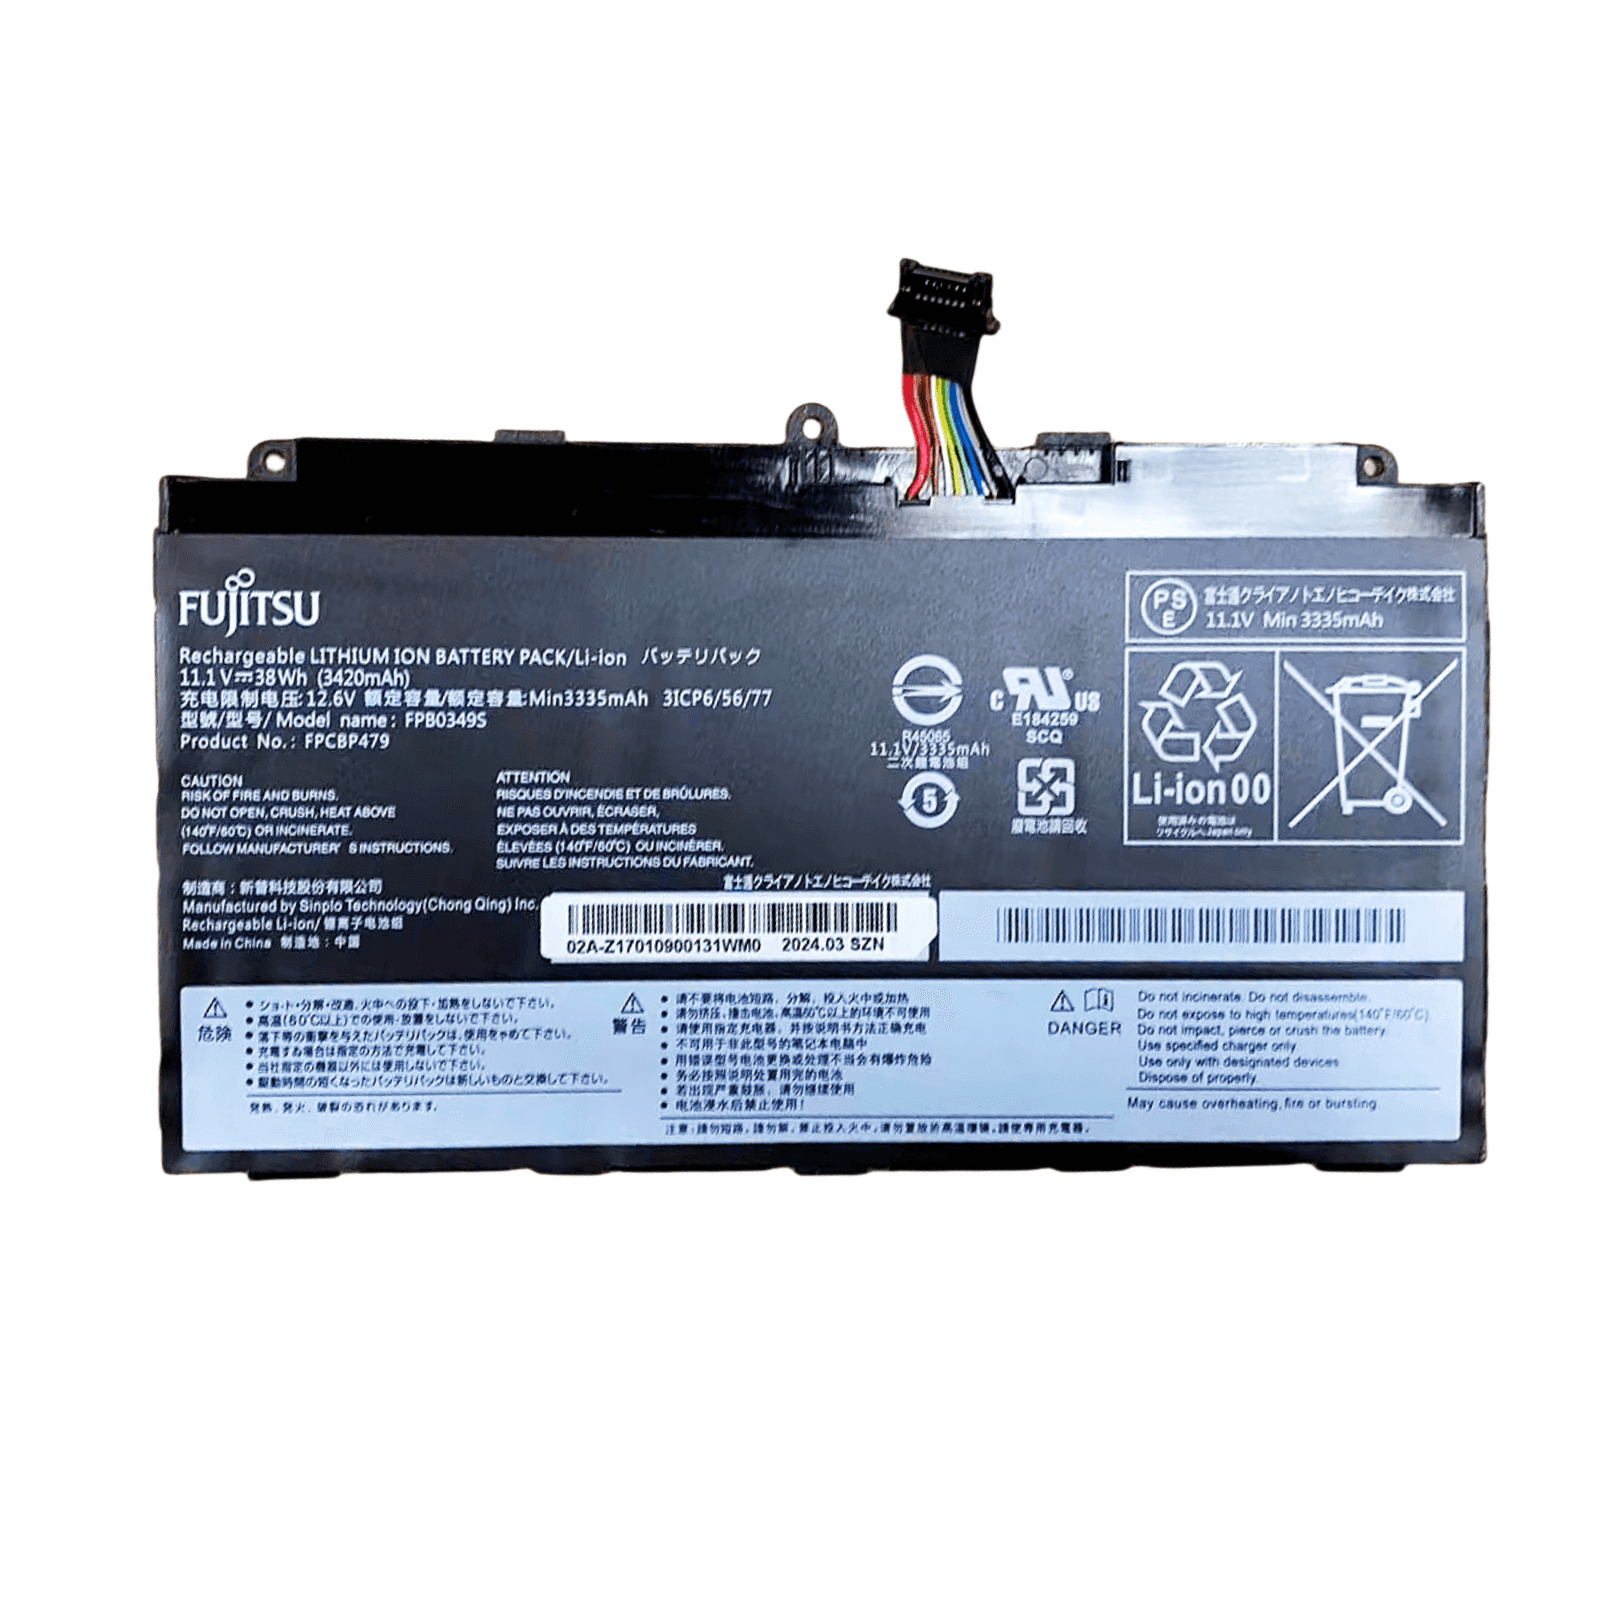 FPB0349S FPCBP479 New Genuine Battery for Fujitsu Stylistic Q616 Q665 Q738 Q739